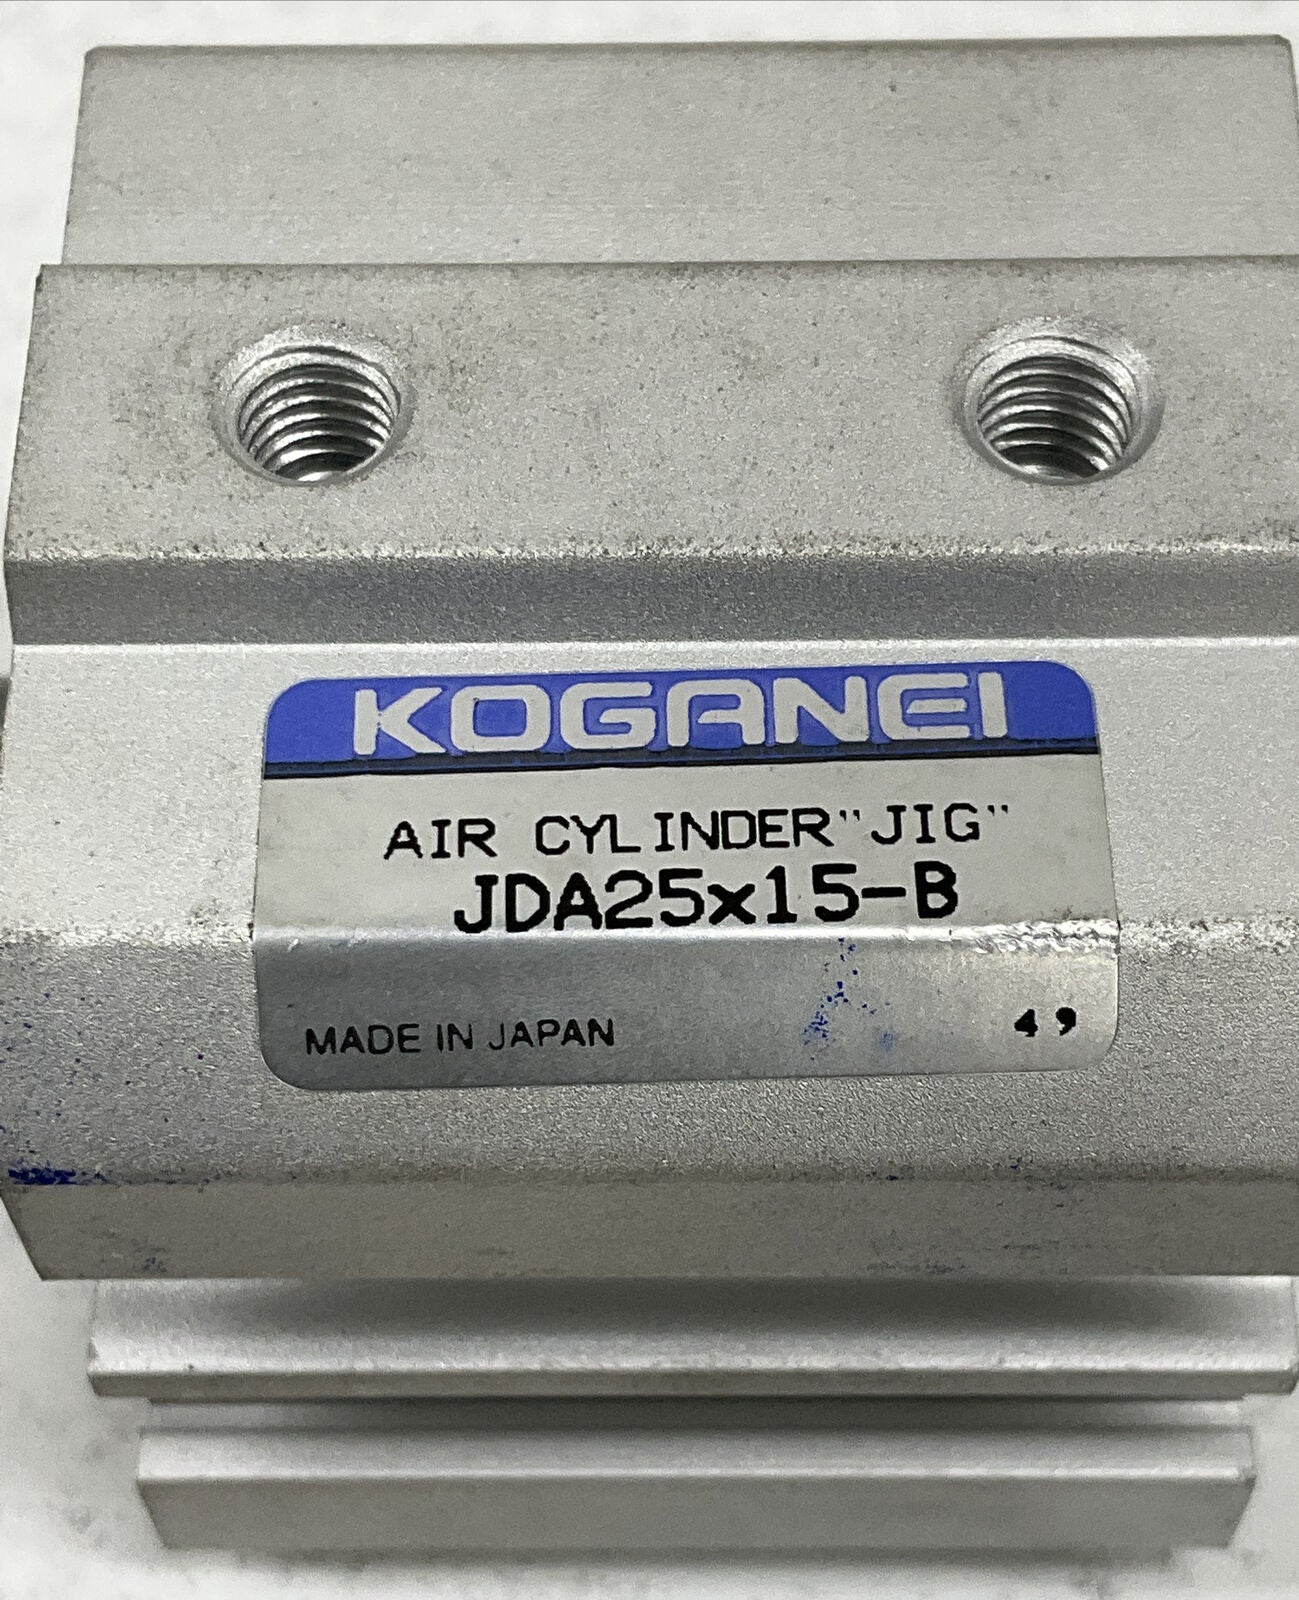 Koganei Air Cylinder "JIG" JDAS25X15-B BL222)